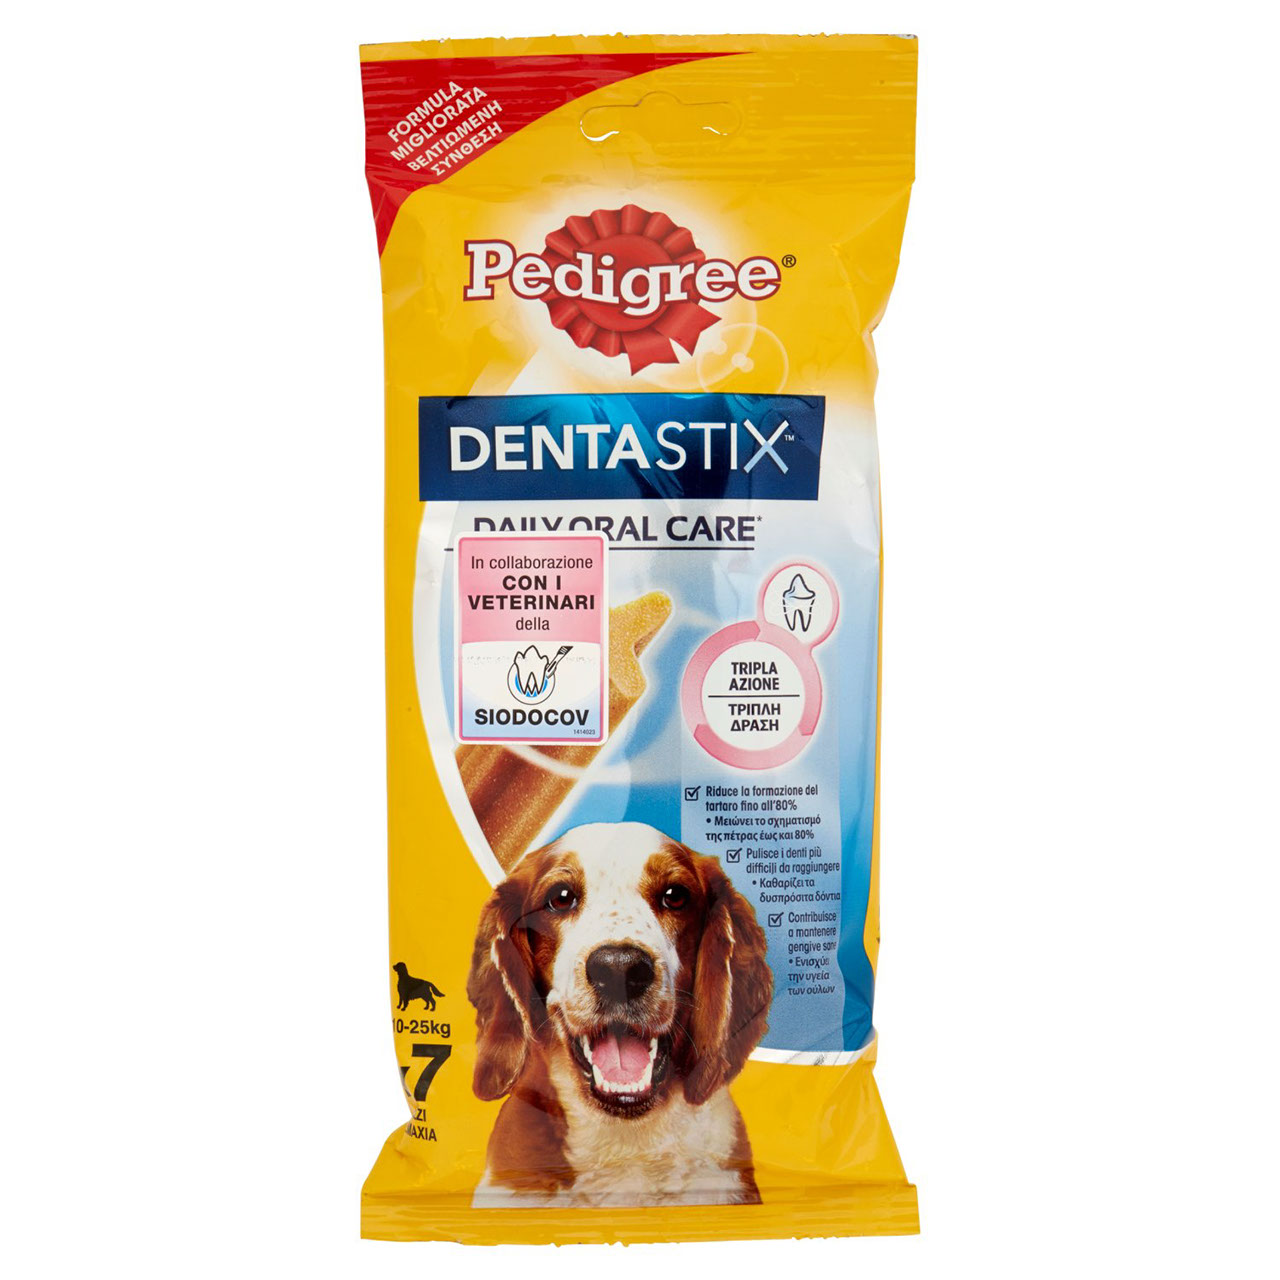 Pedigree DentaStix Daily Oral Care* 10-25 kg 7 Pezzi 180 g